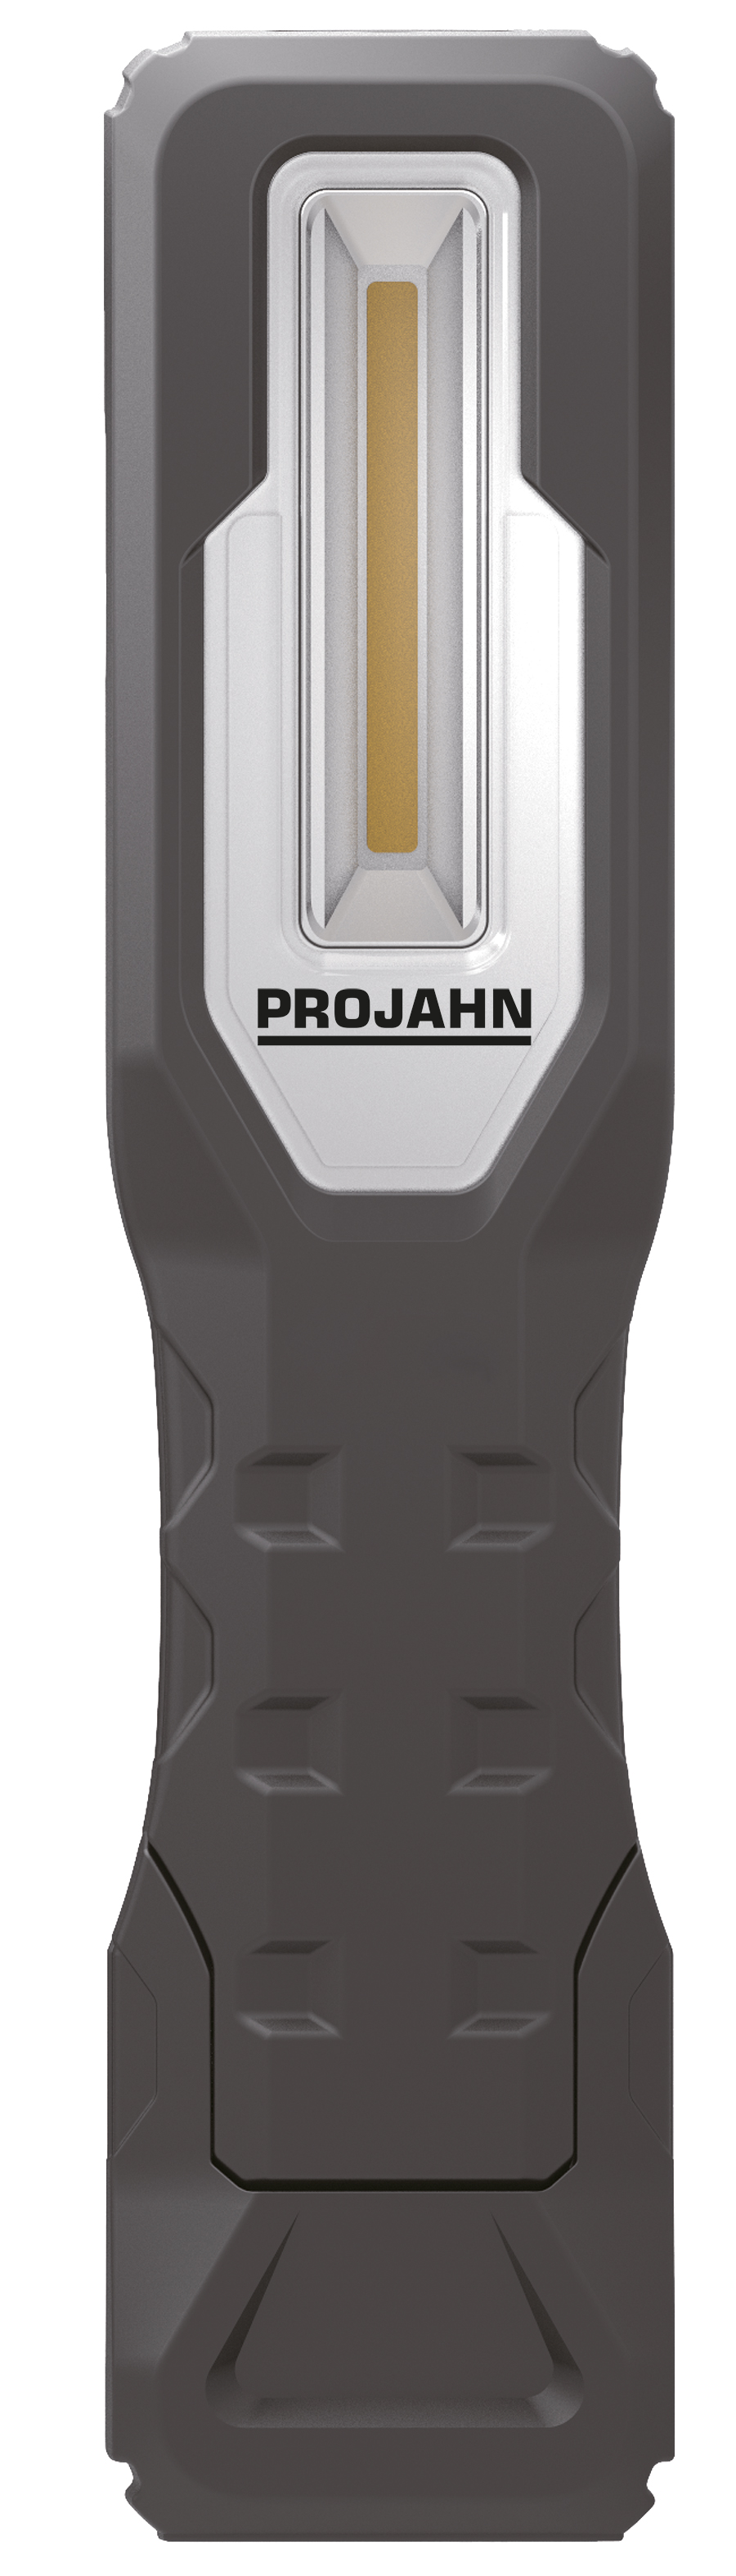 Projahn POWER LED Akku Hand-Arbeitslampe PJ-HL1200 Wiederaufladbar Professional / -398254